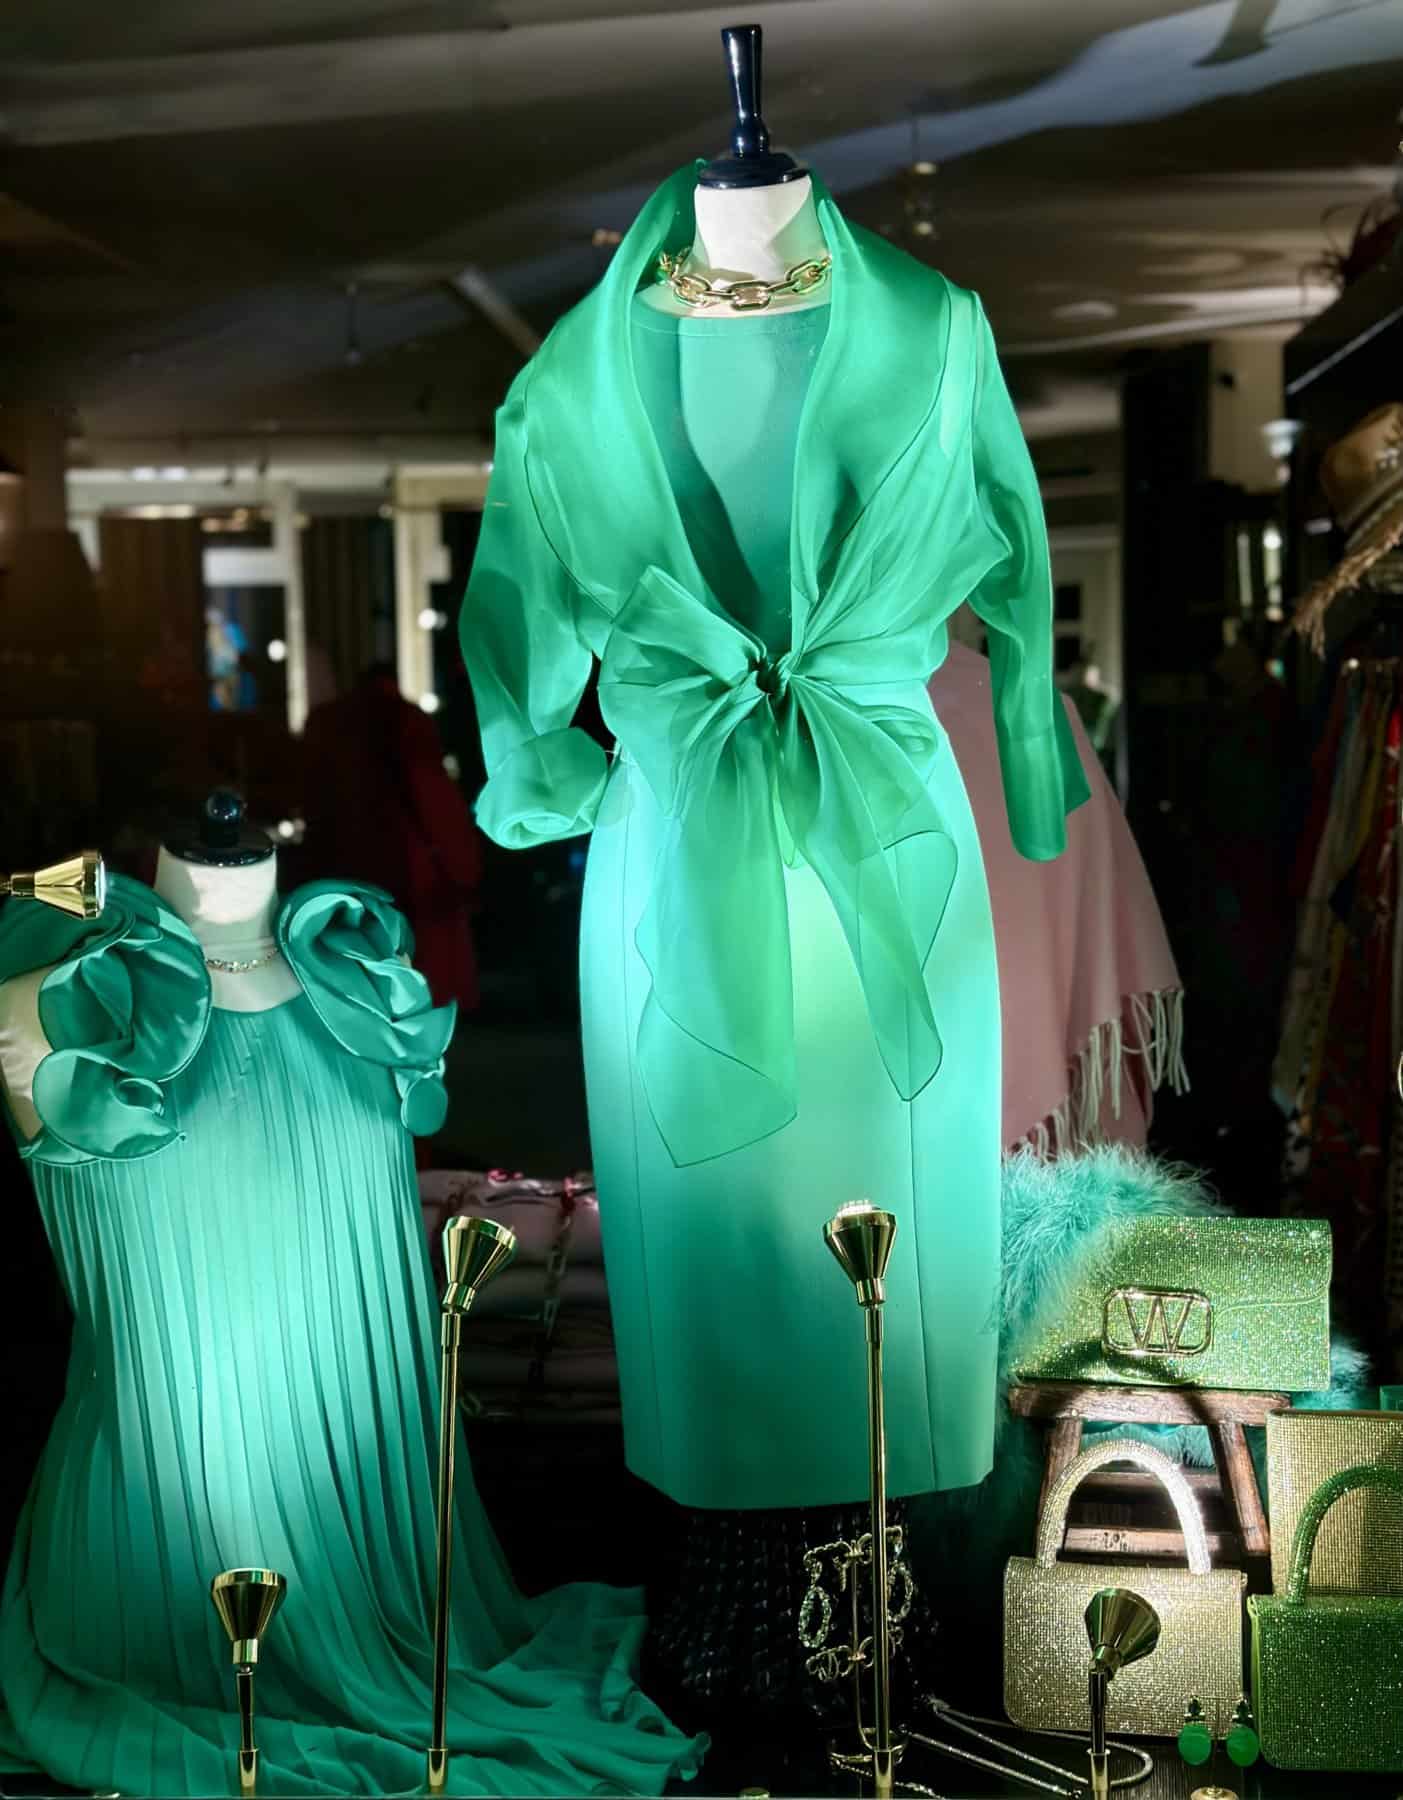 japon groen, gelegeheids kleding verkrijgbaar bij dames mode modici